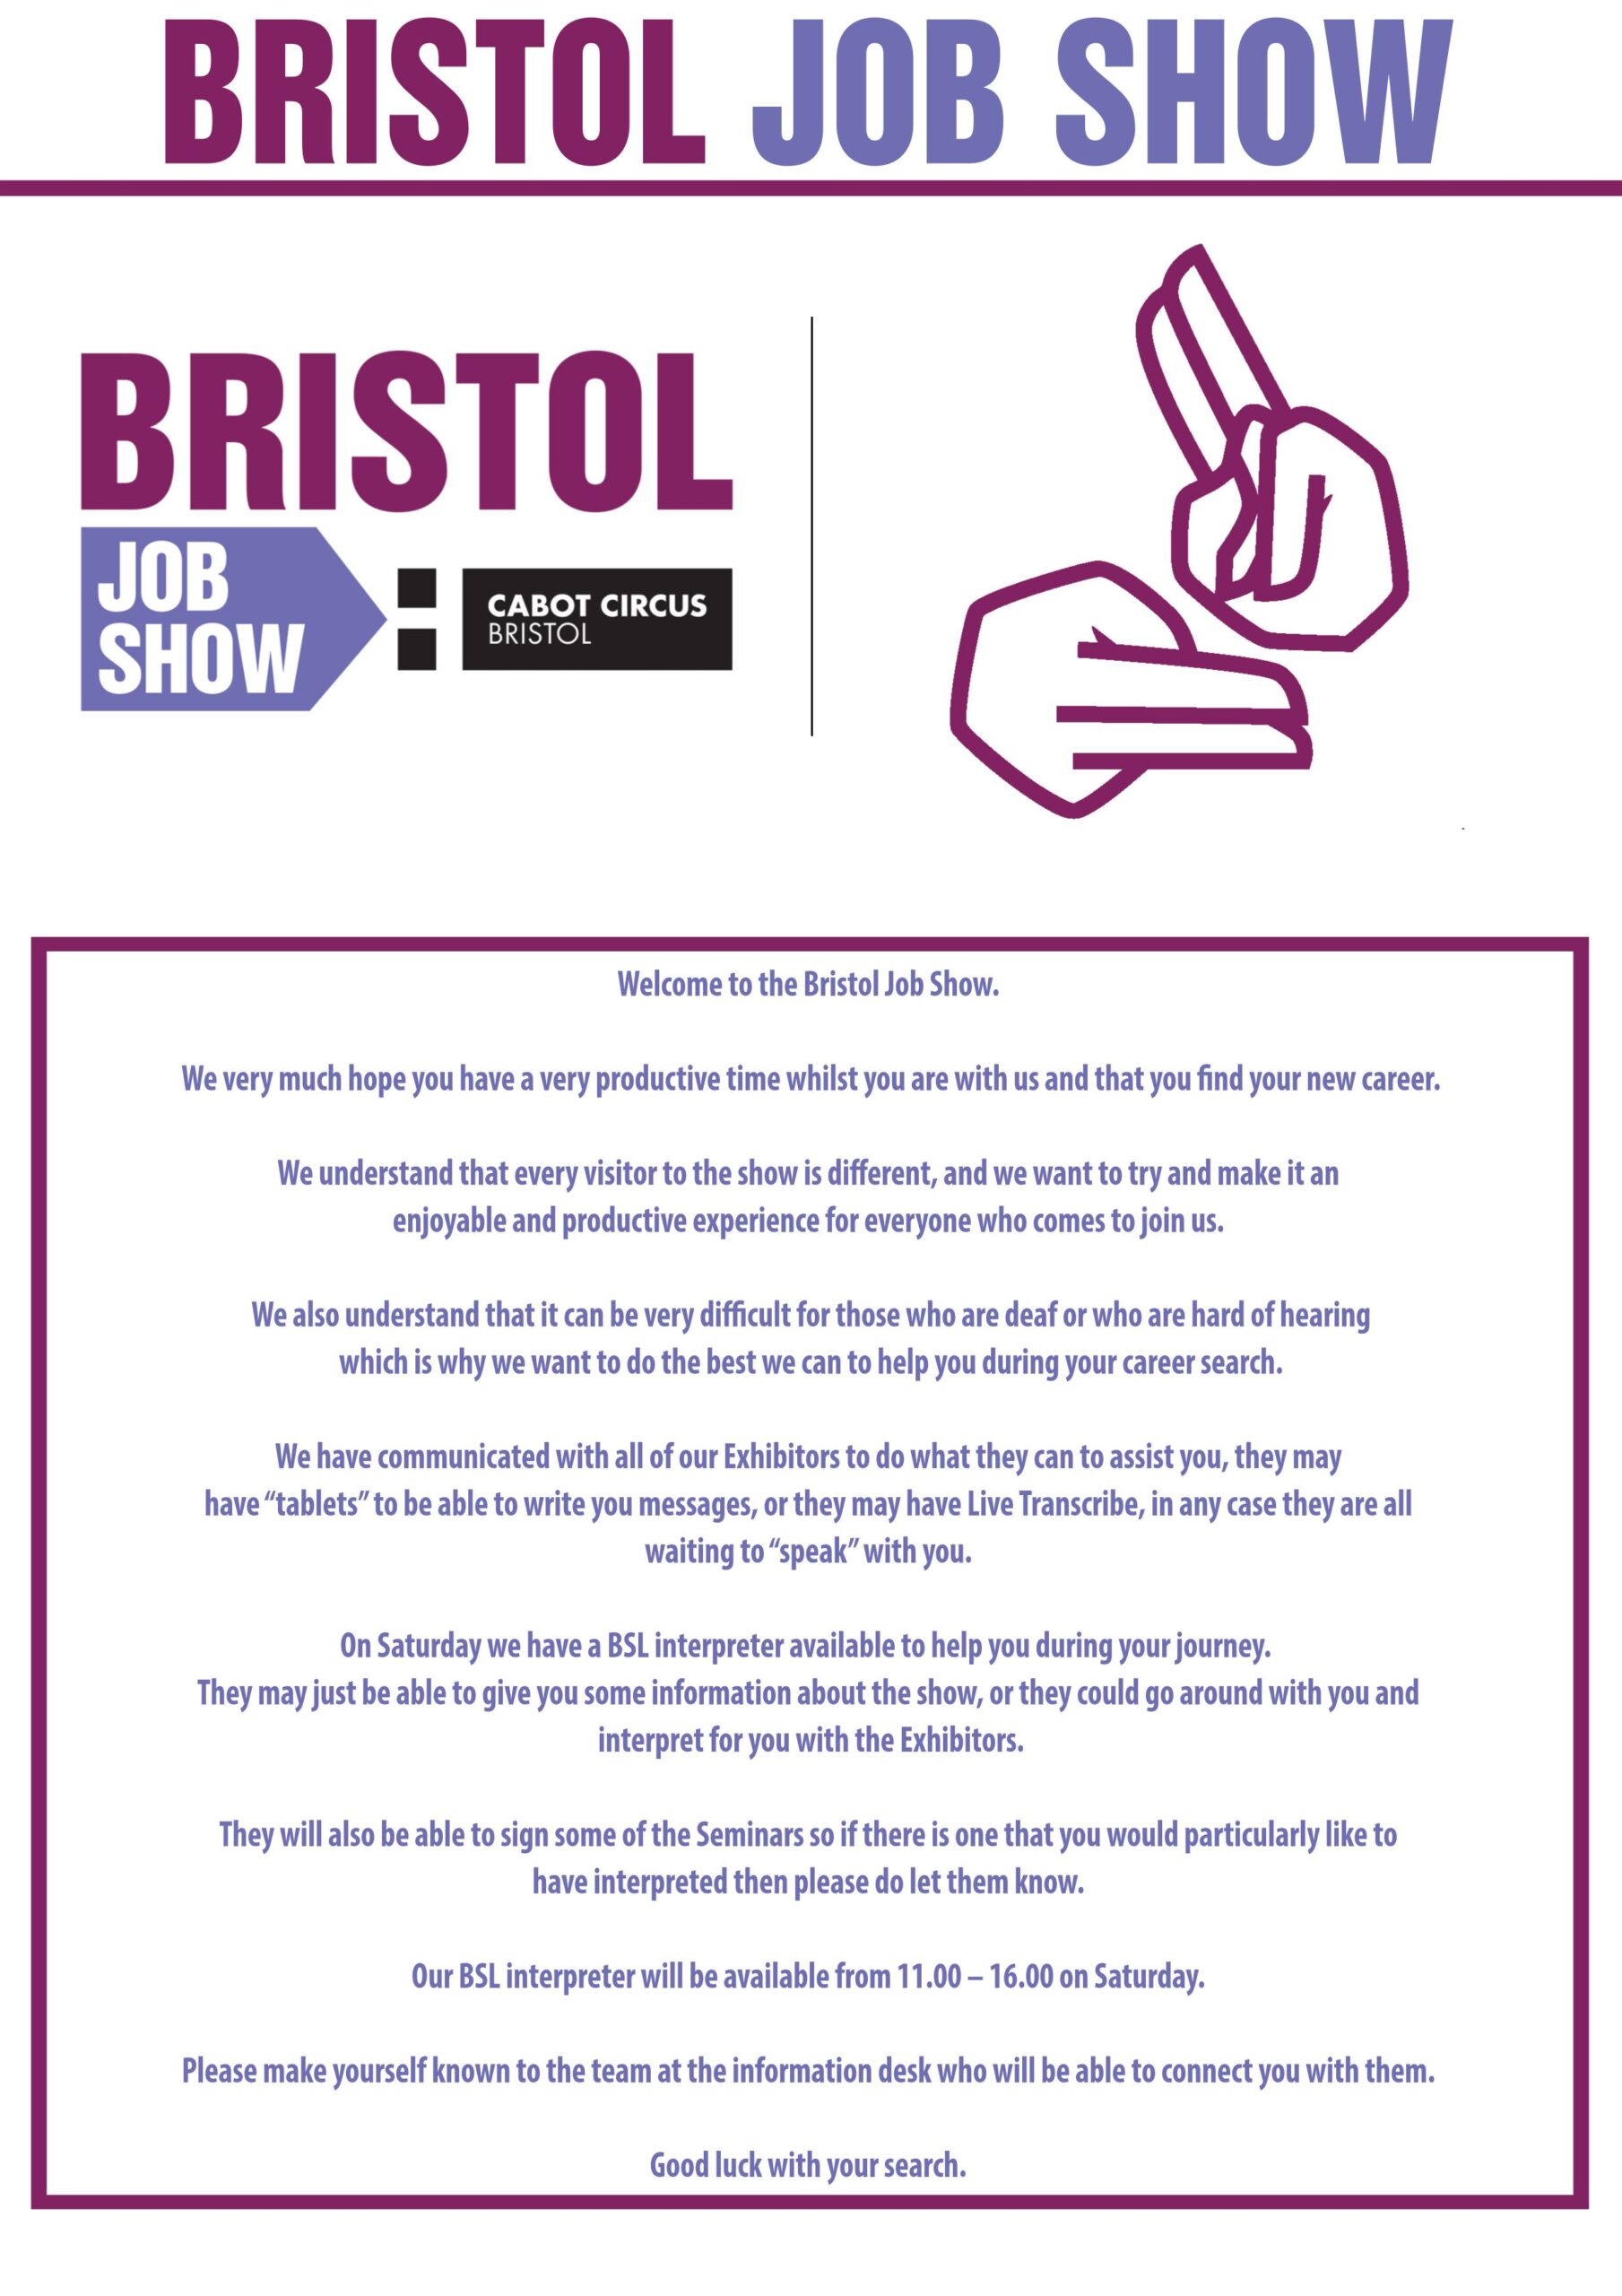 Bristol Job Show Saturday BSL Information